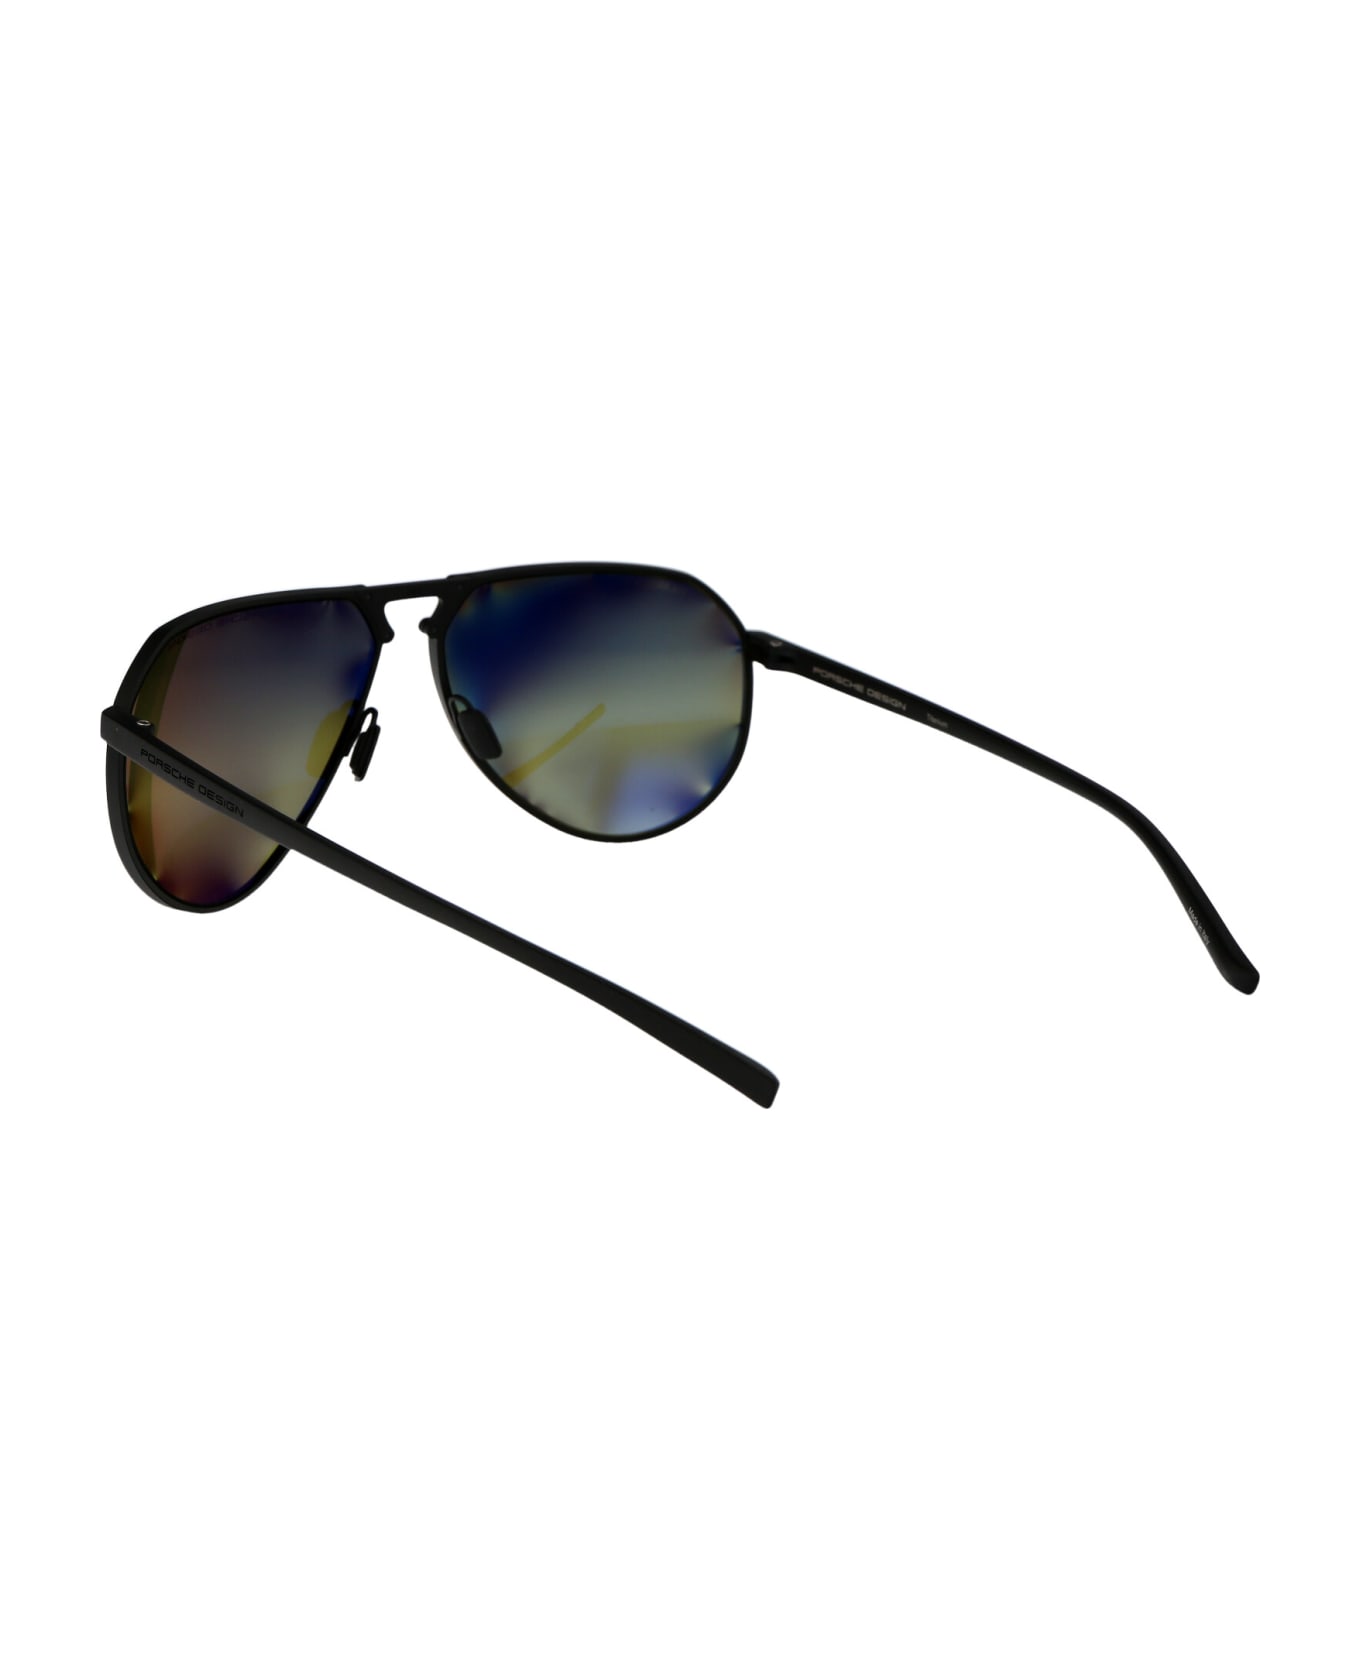 Porsche Design P8938 Sunglasses - A417 BLACK